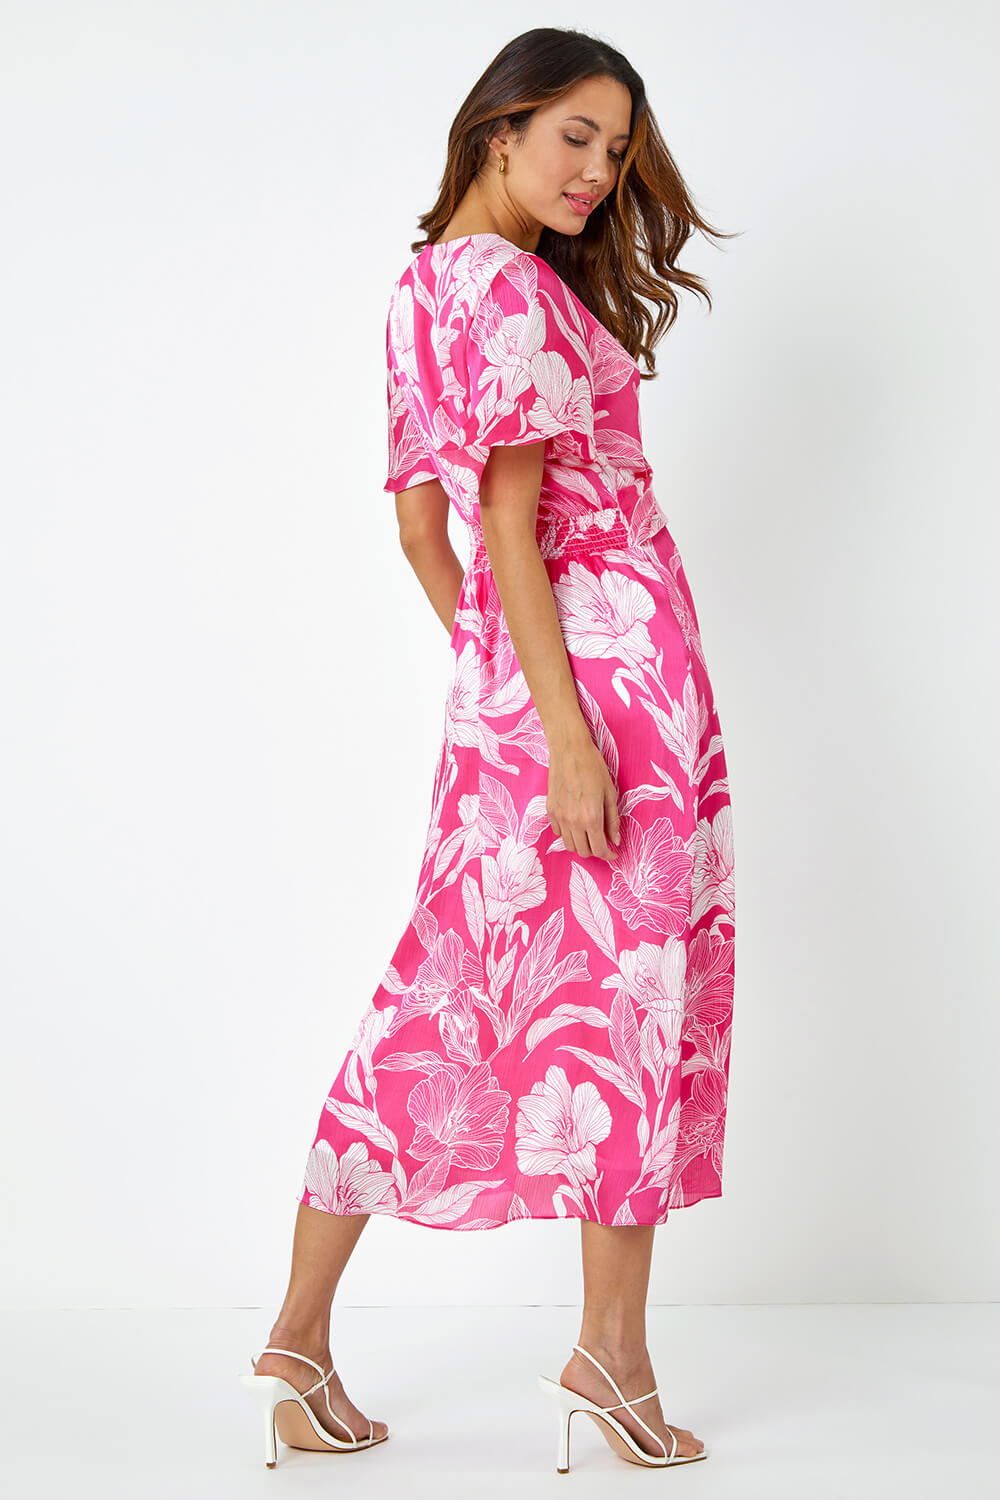 PINK Floral Print Twist Front Midi Dress, Image 3 of 5